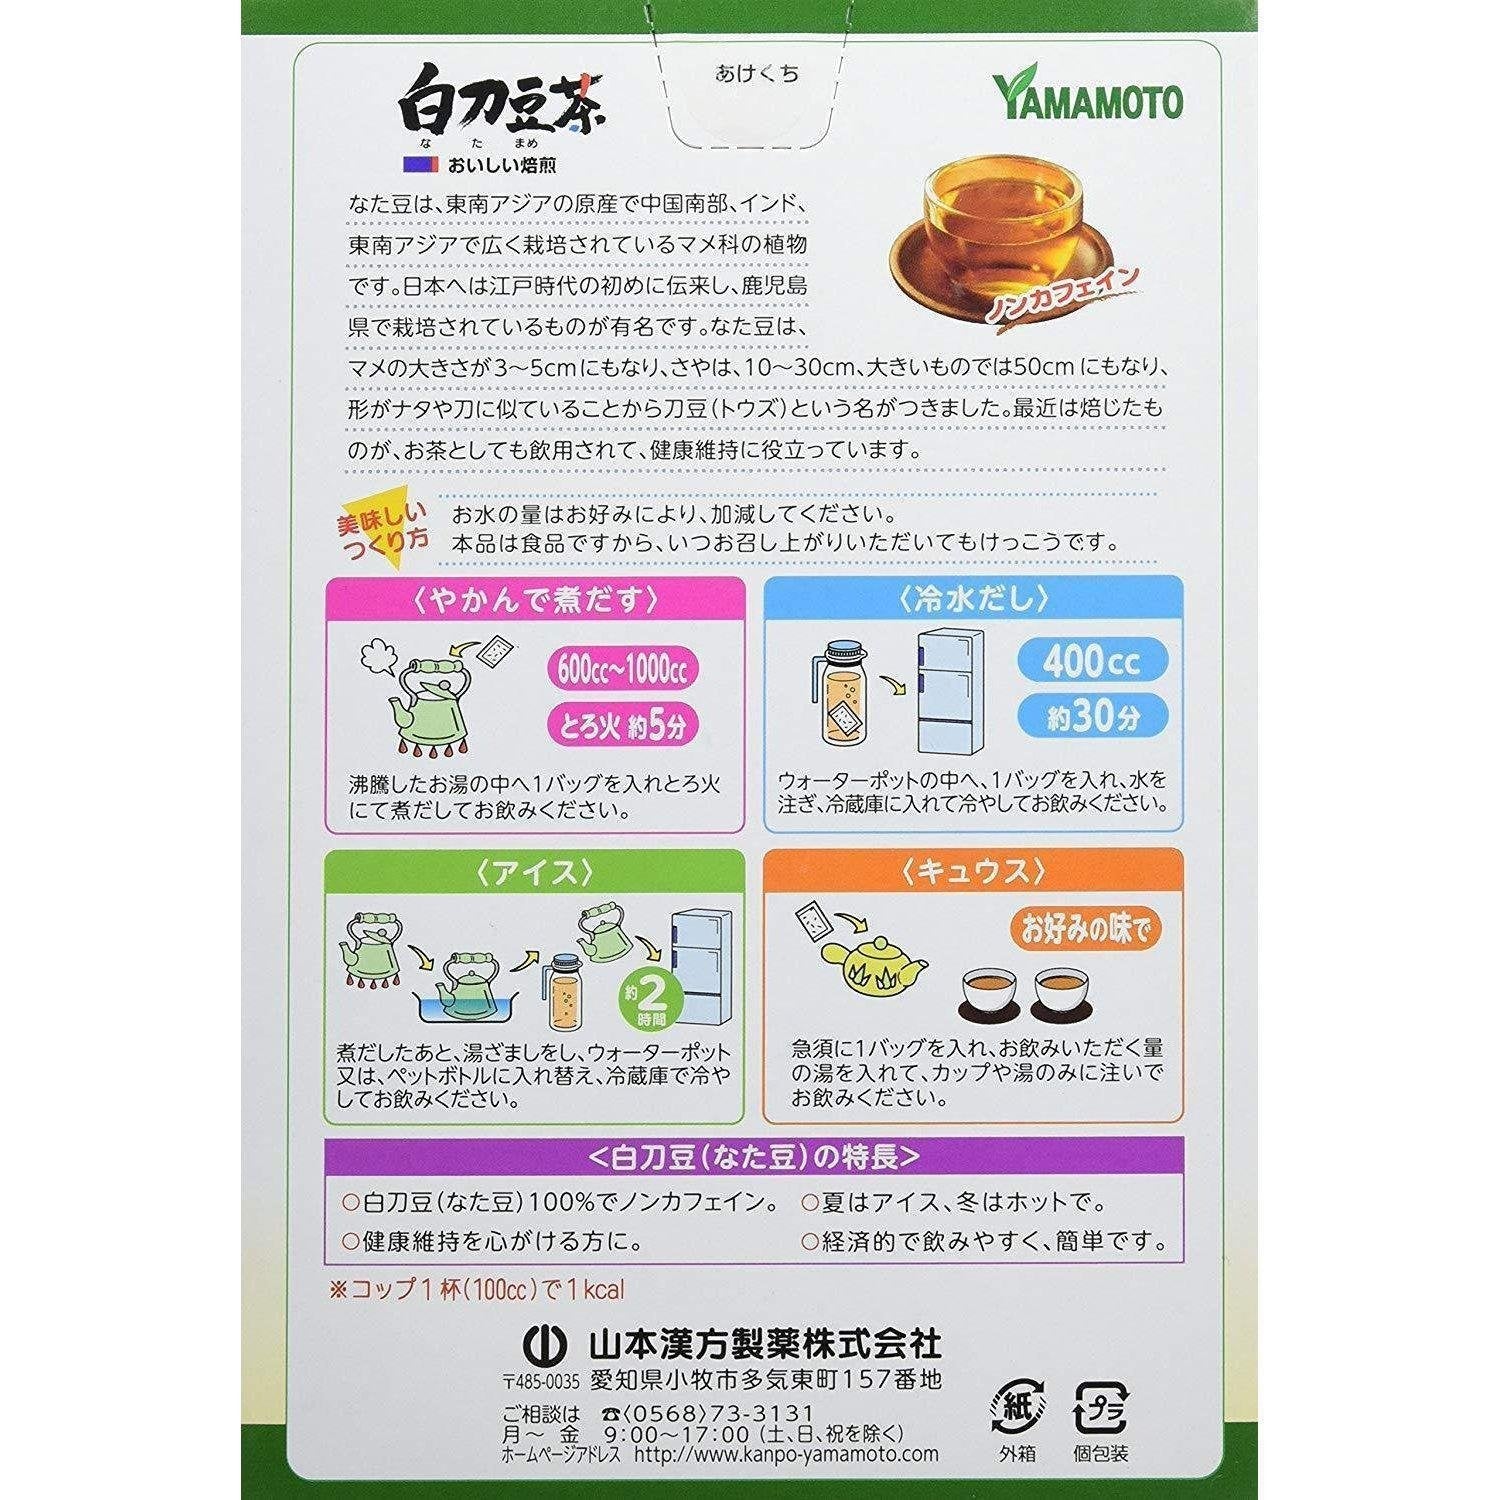 Yamamoto Kanpo Sword Bean Tea 6g x 12 Tea Bags